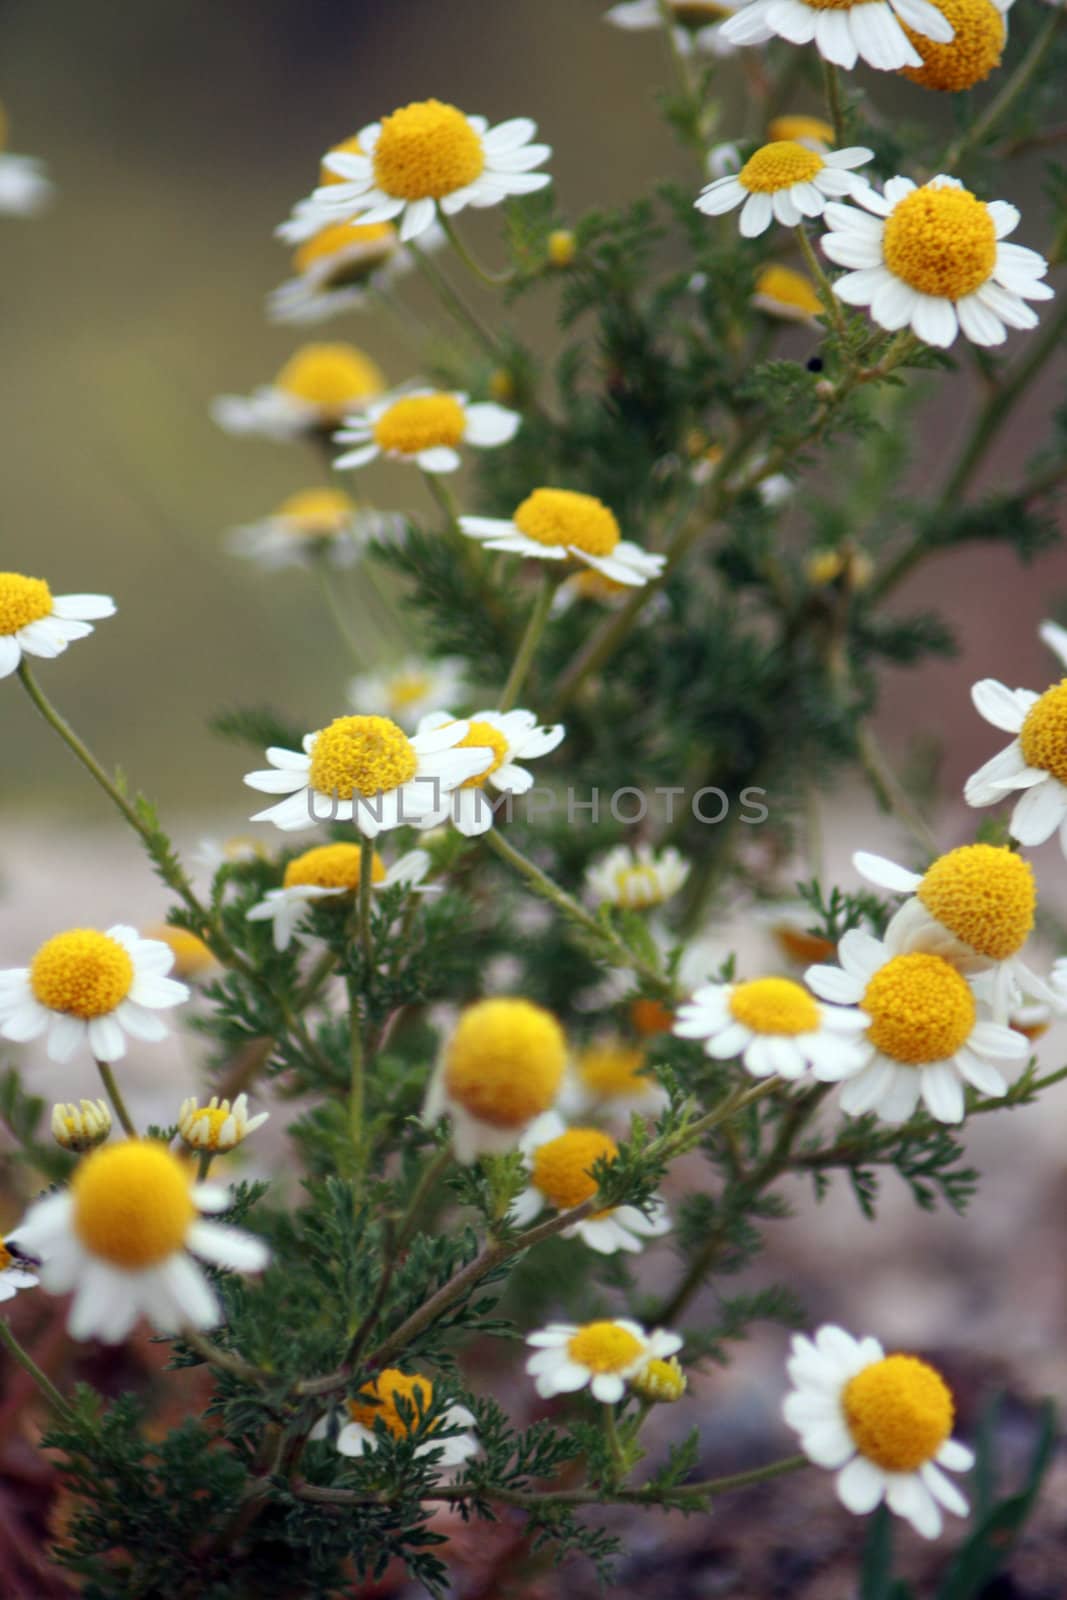 daisy by nehru